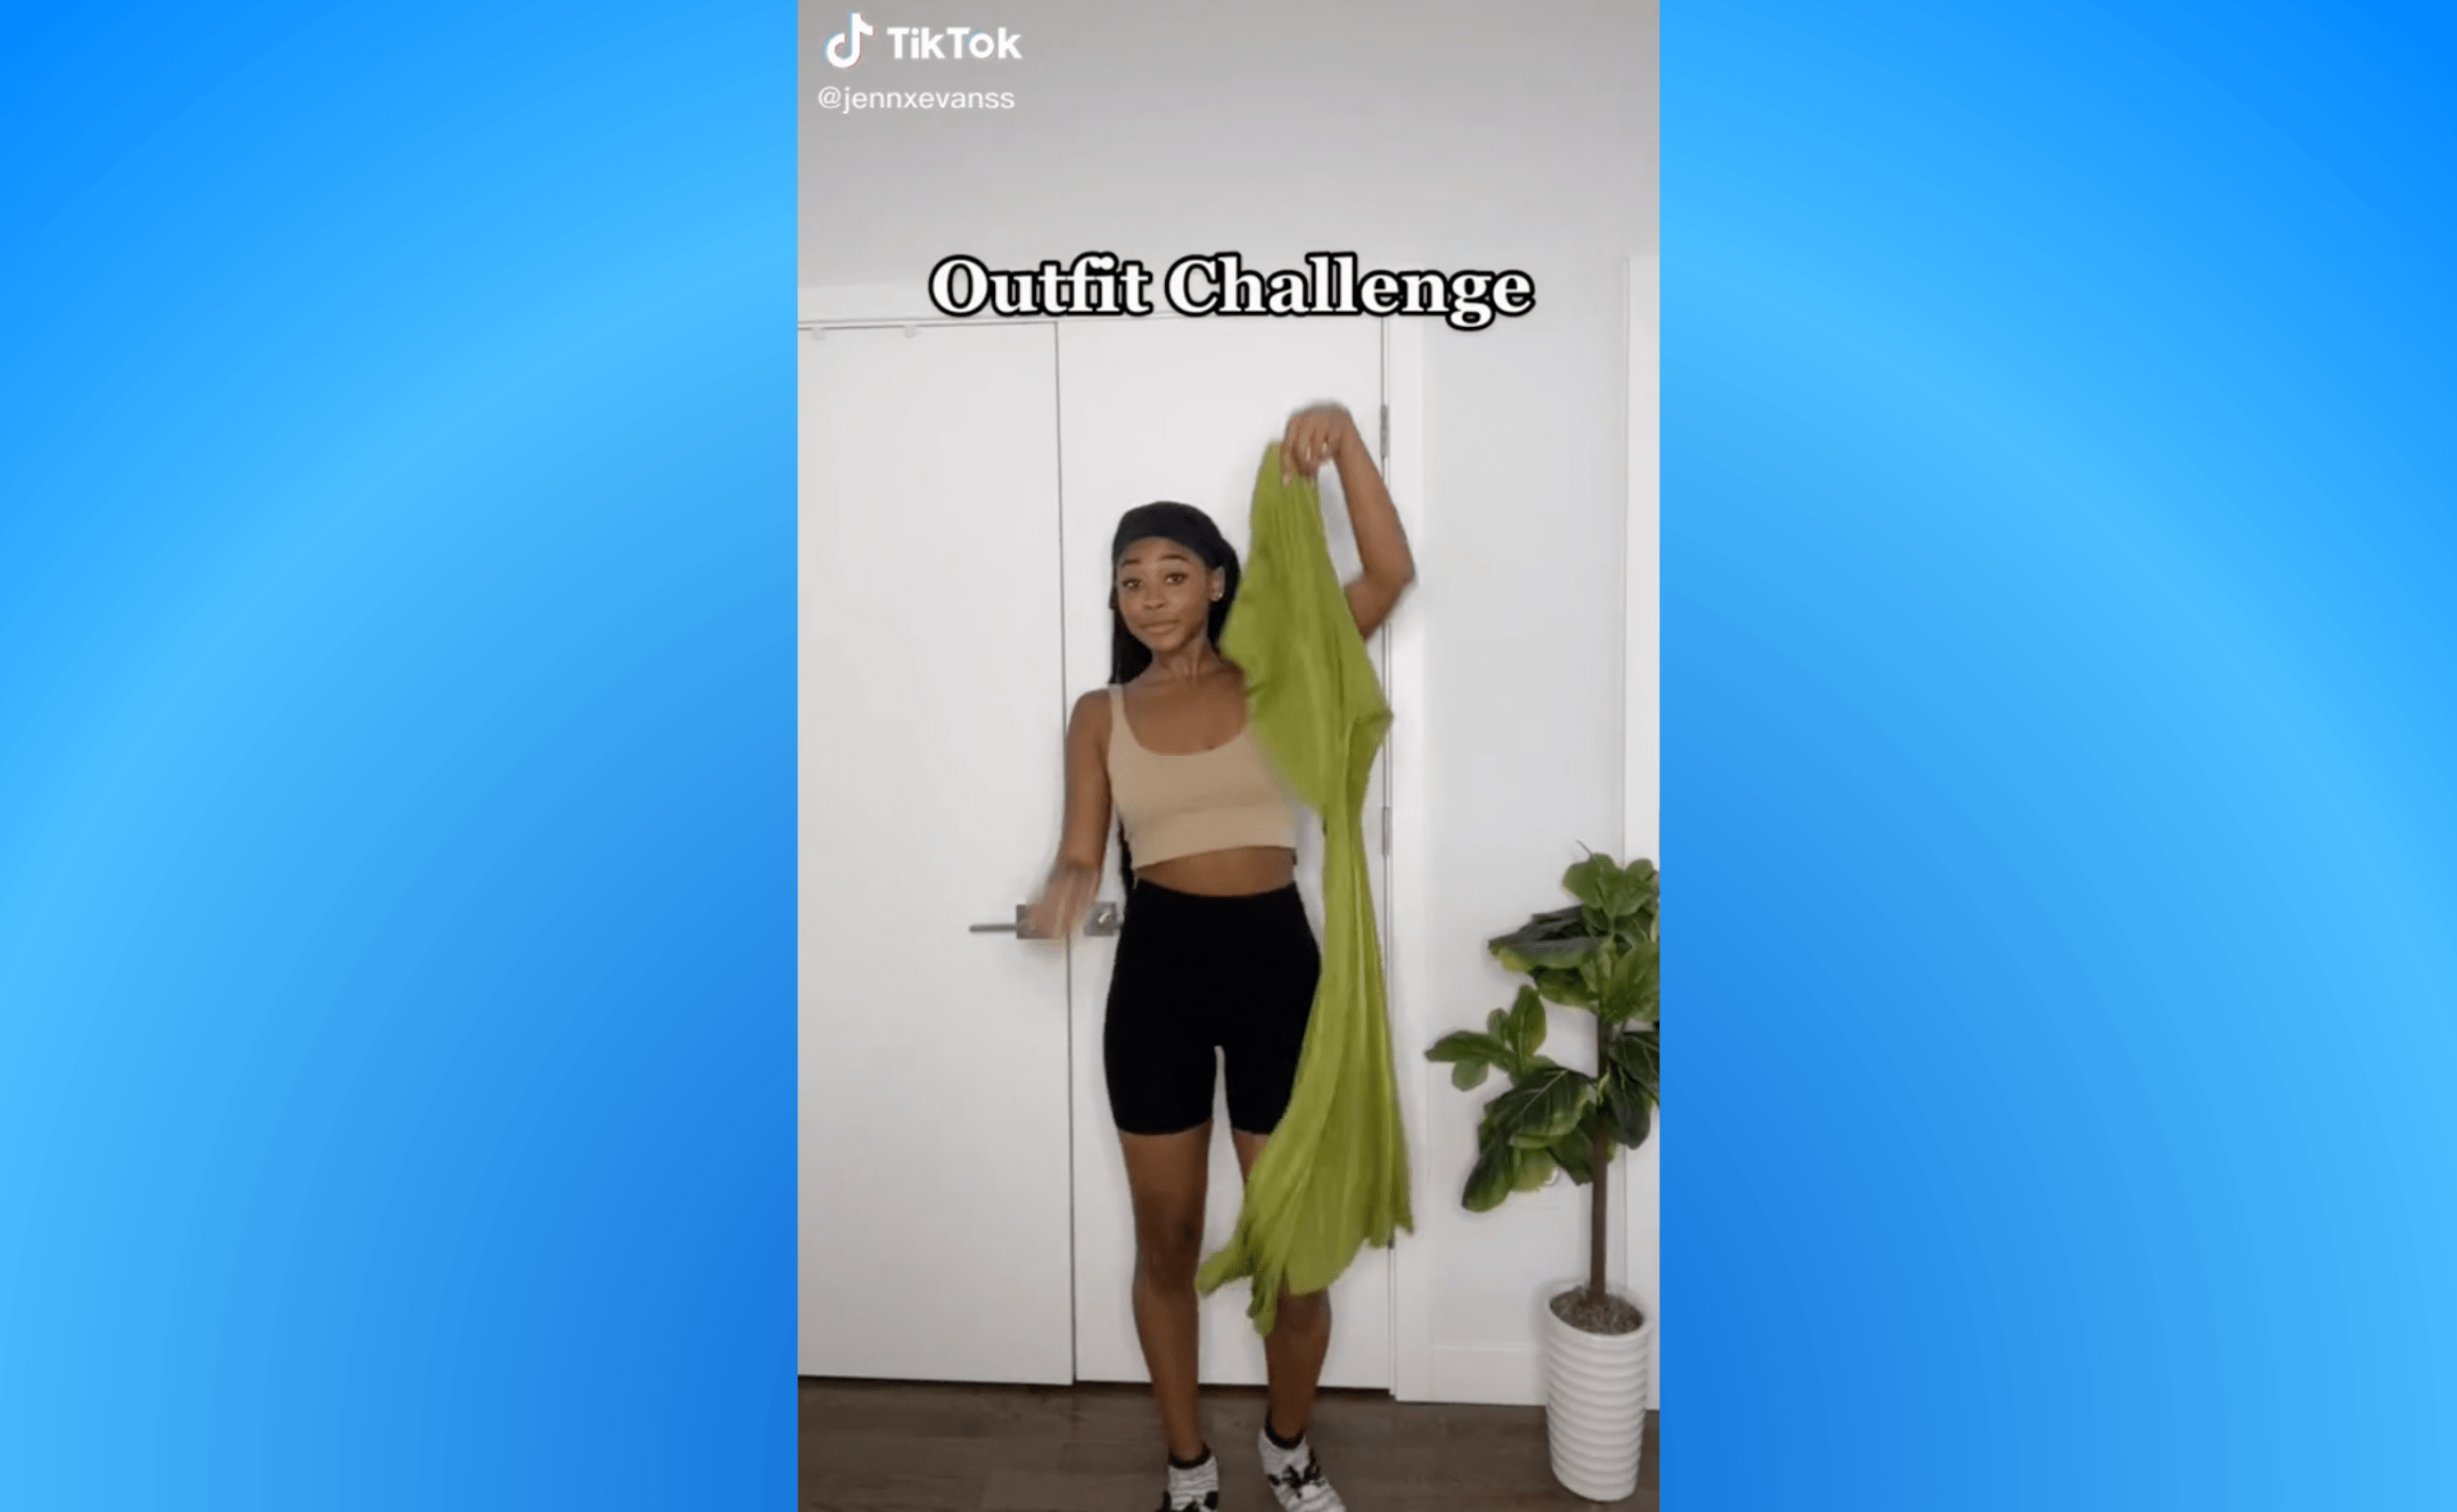 TikTok Challenge Idea: Outfit  challenge